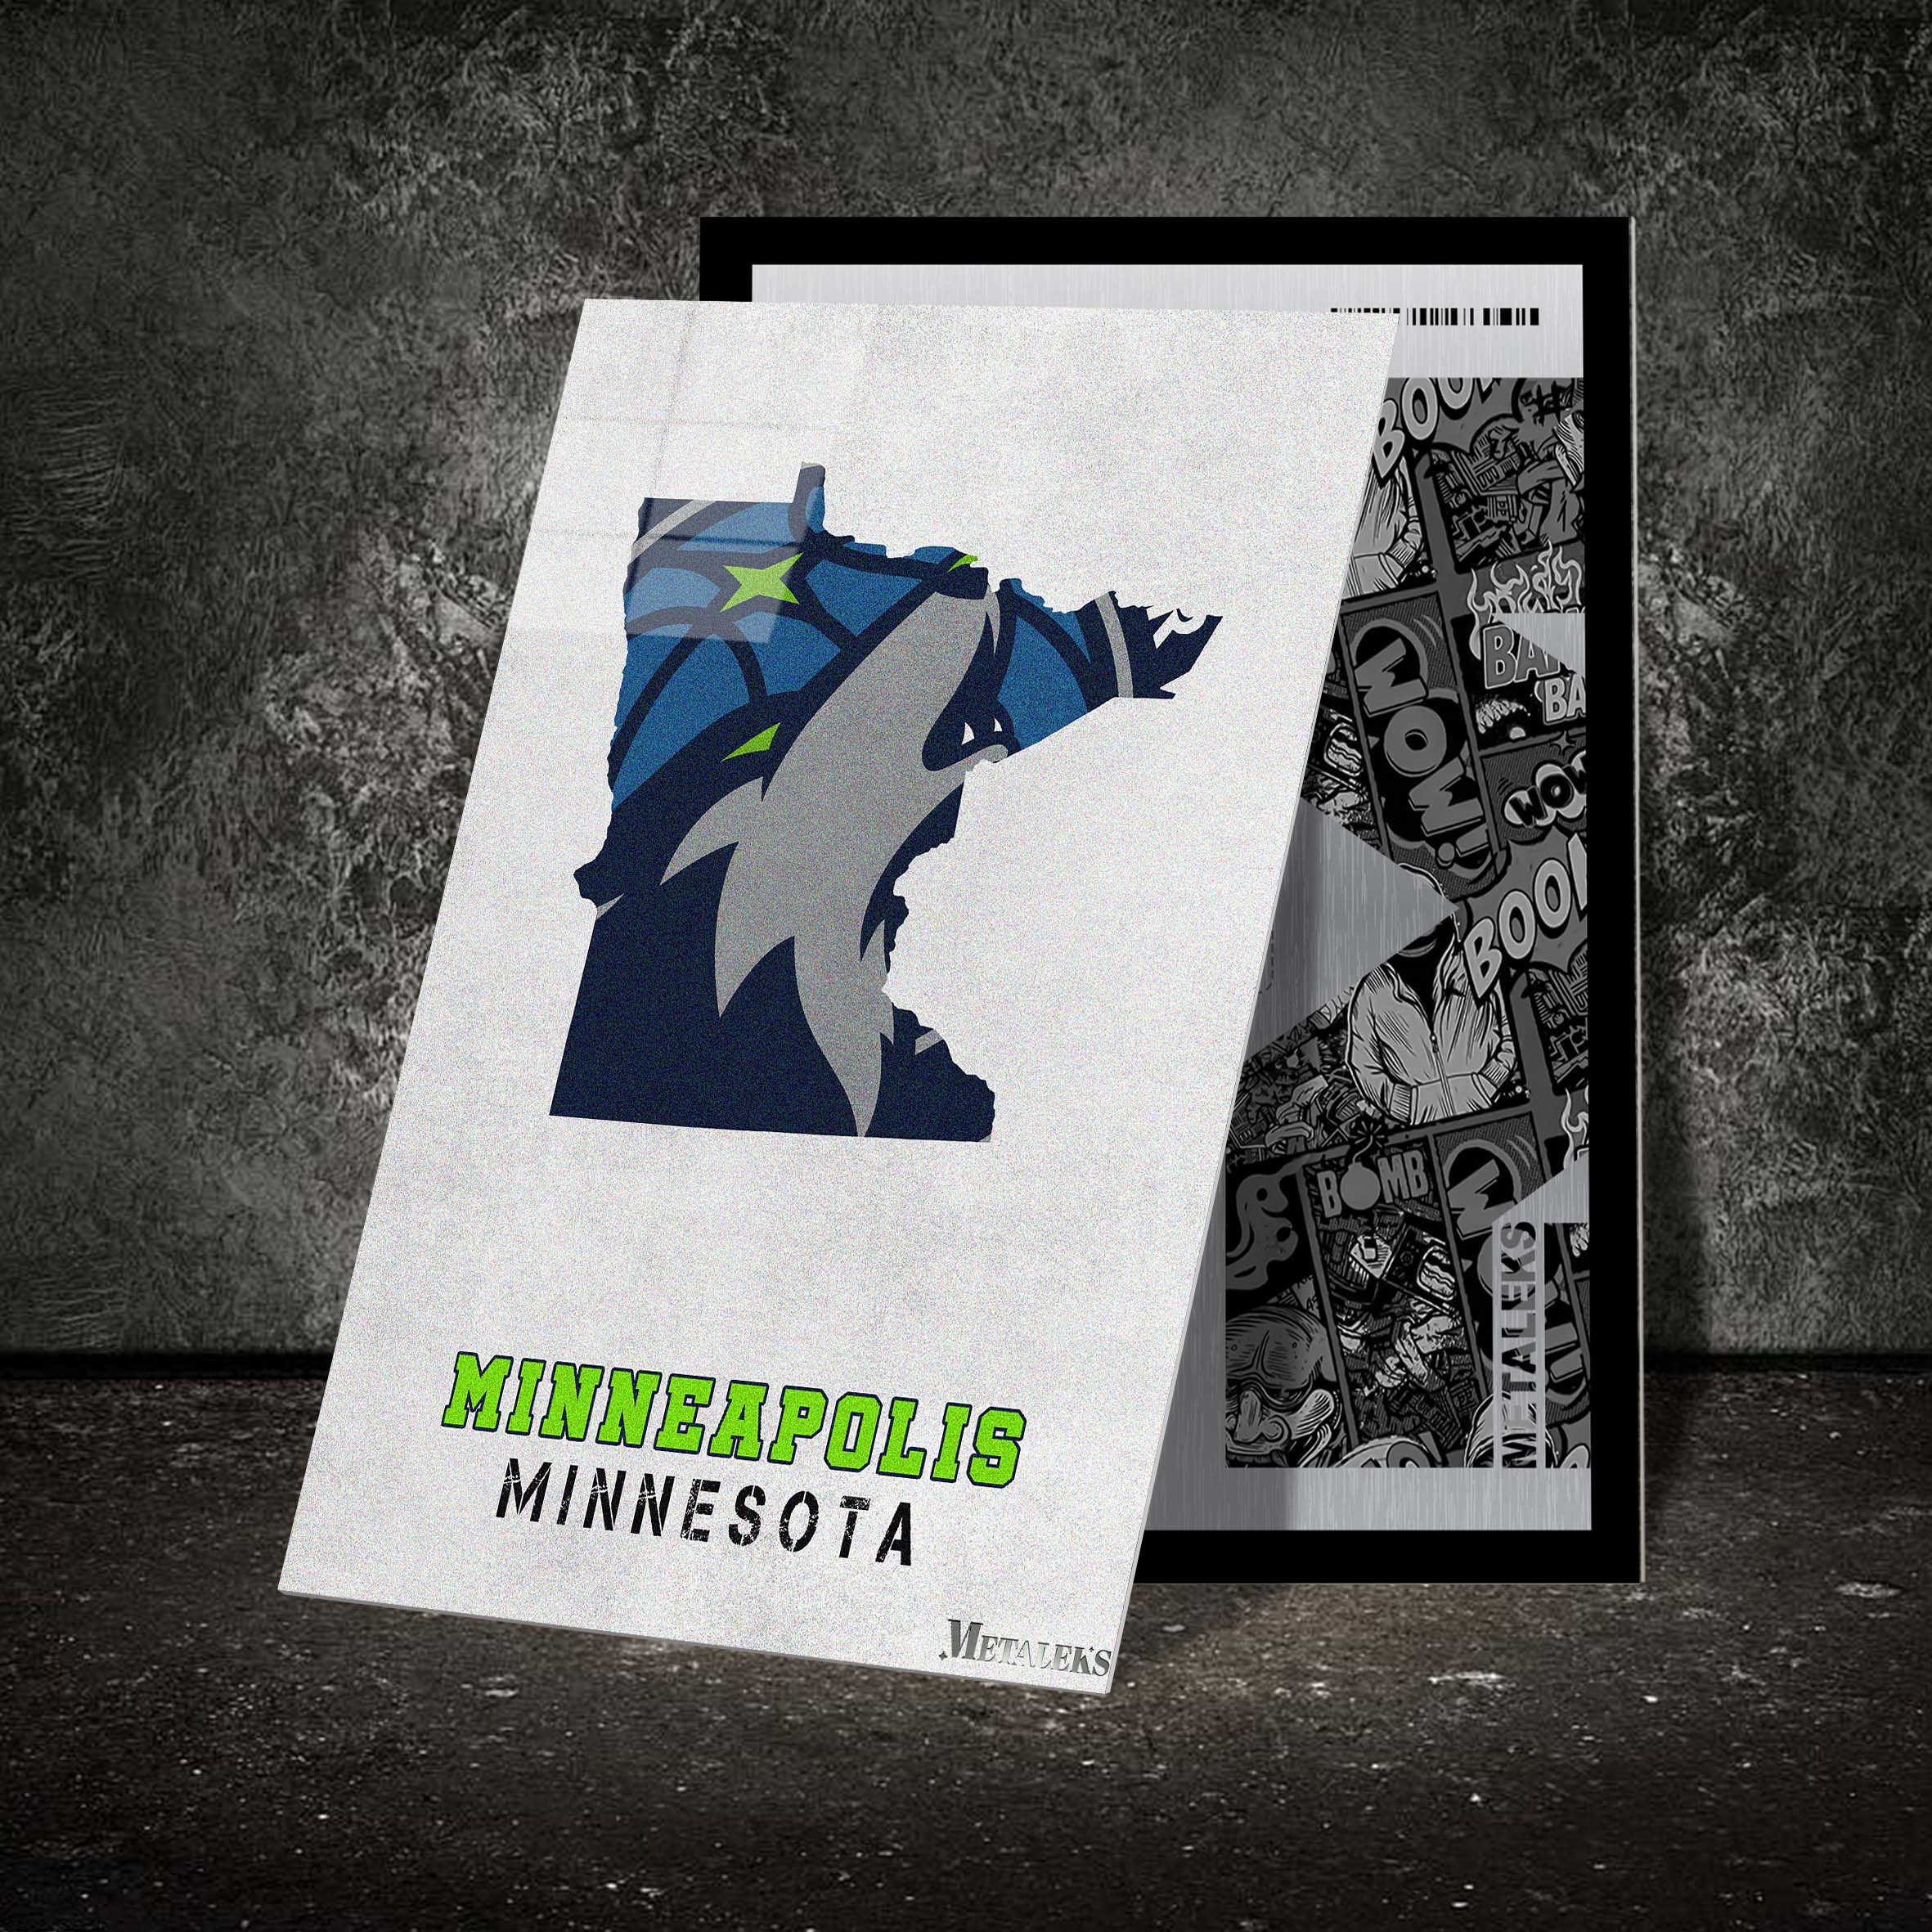 Minnesota Timberwolves-designed by @Hoang Van Thuan